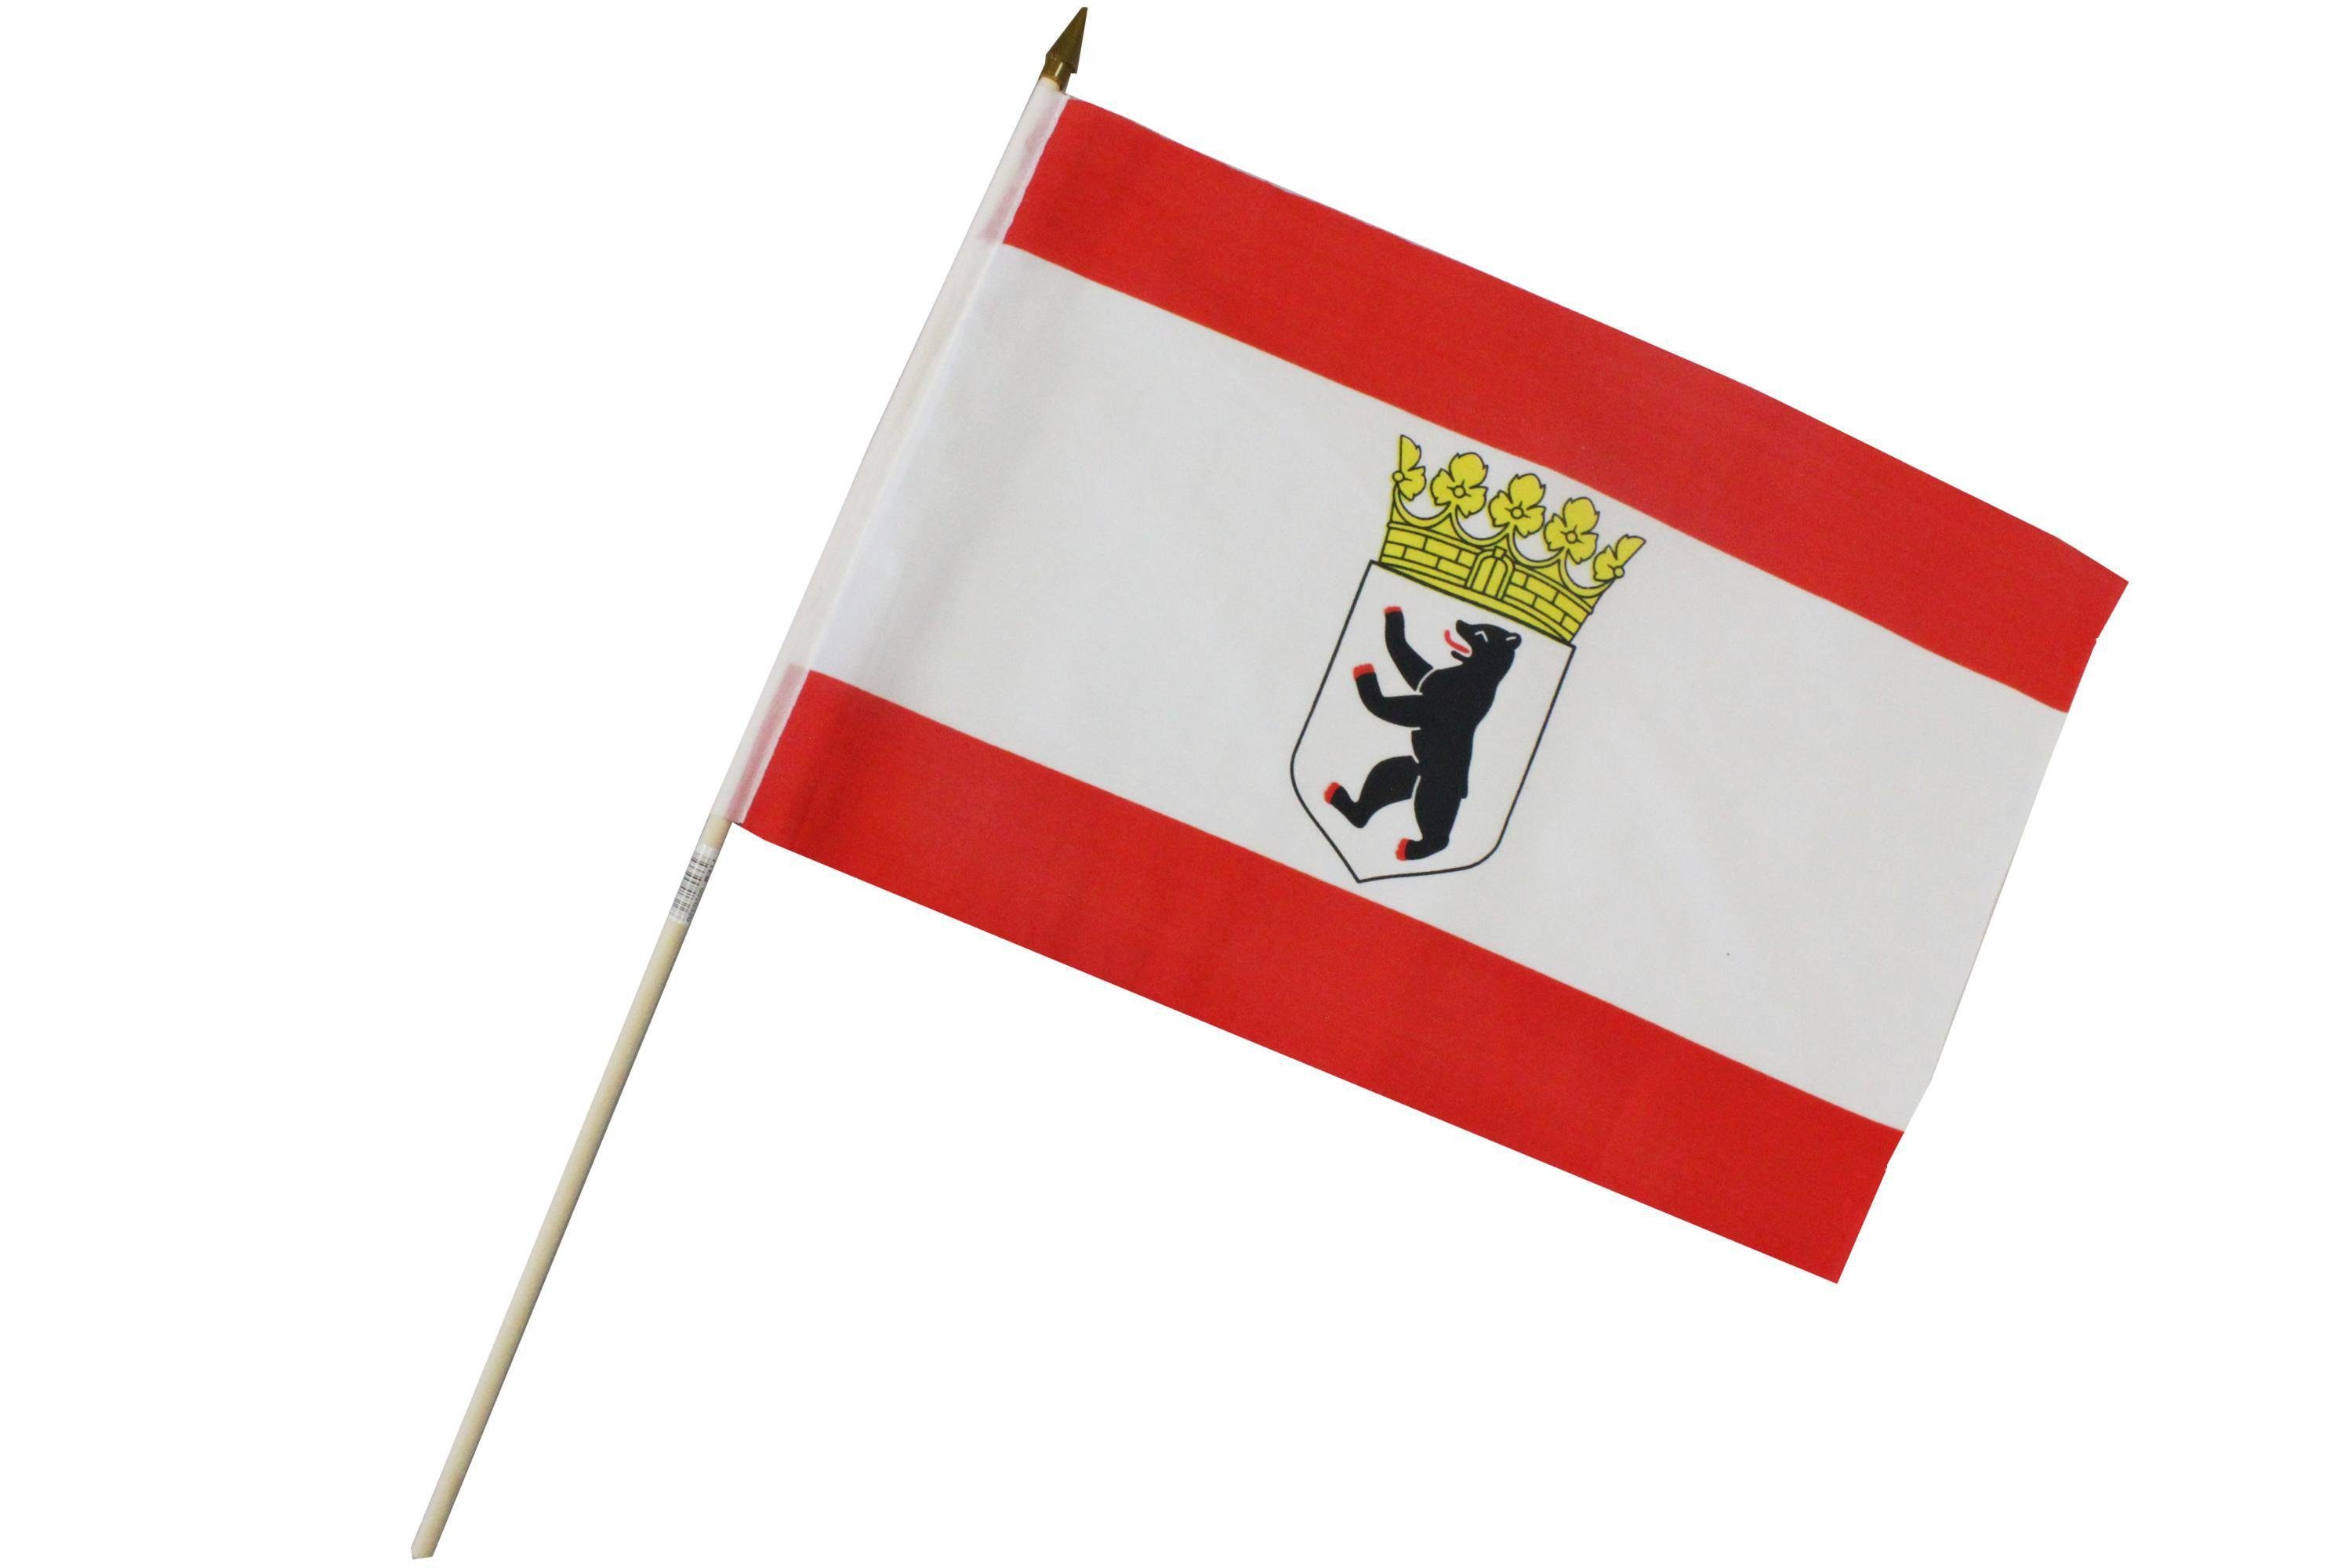 ELLUG Flagge Fahne Flagge 30 x 45cm mit Holzstab Höhe 60cm Handfahne Stockflagge Banner Fan